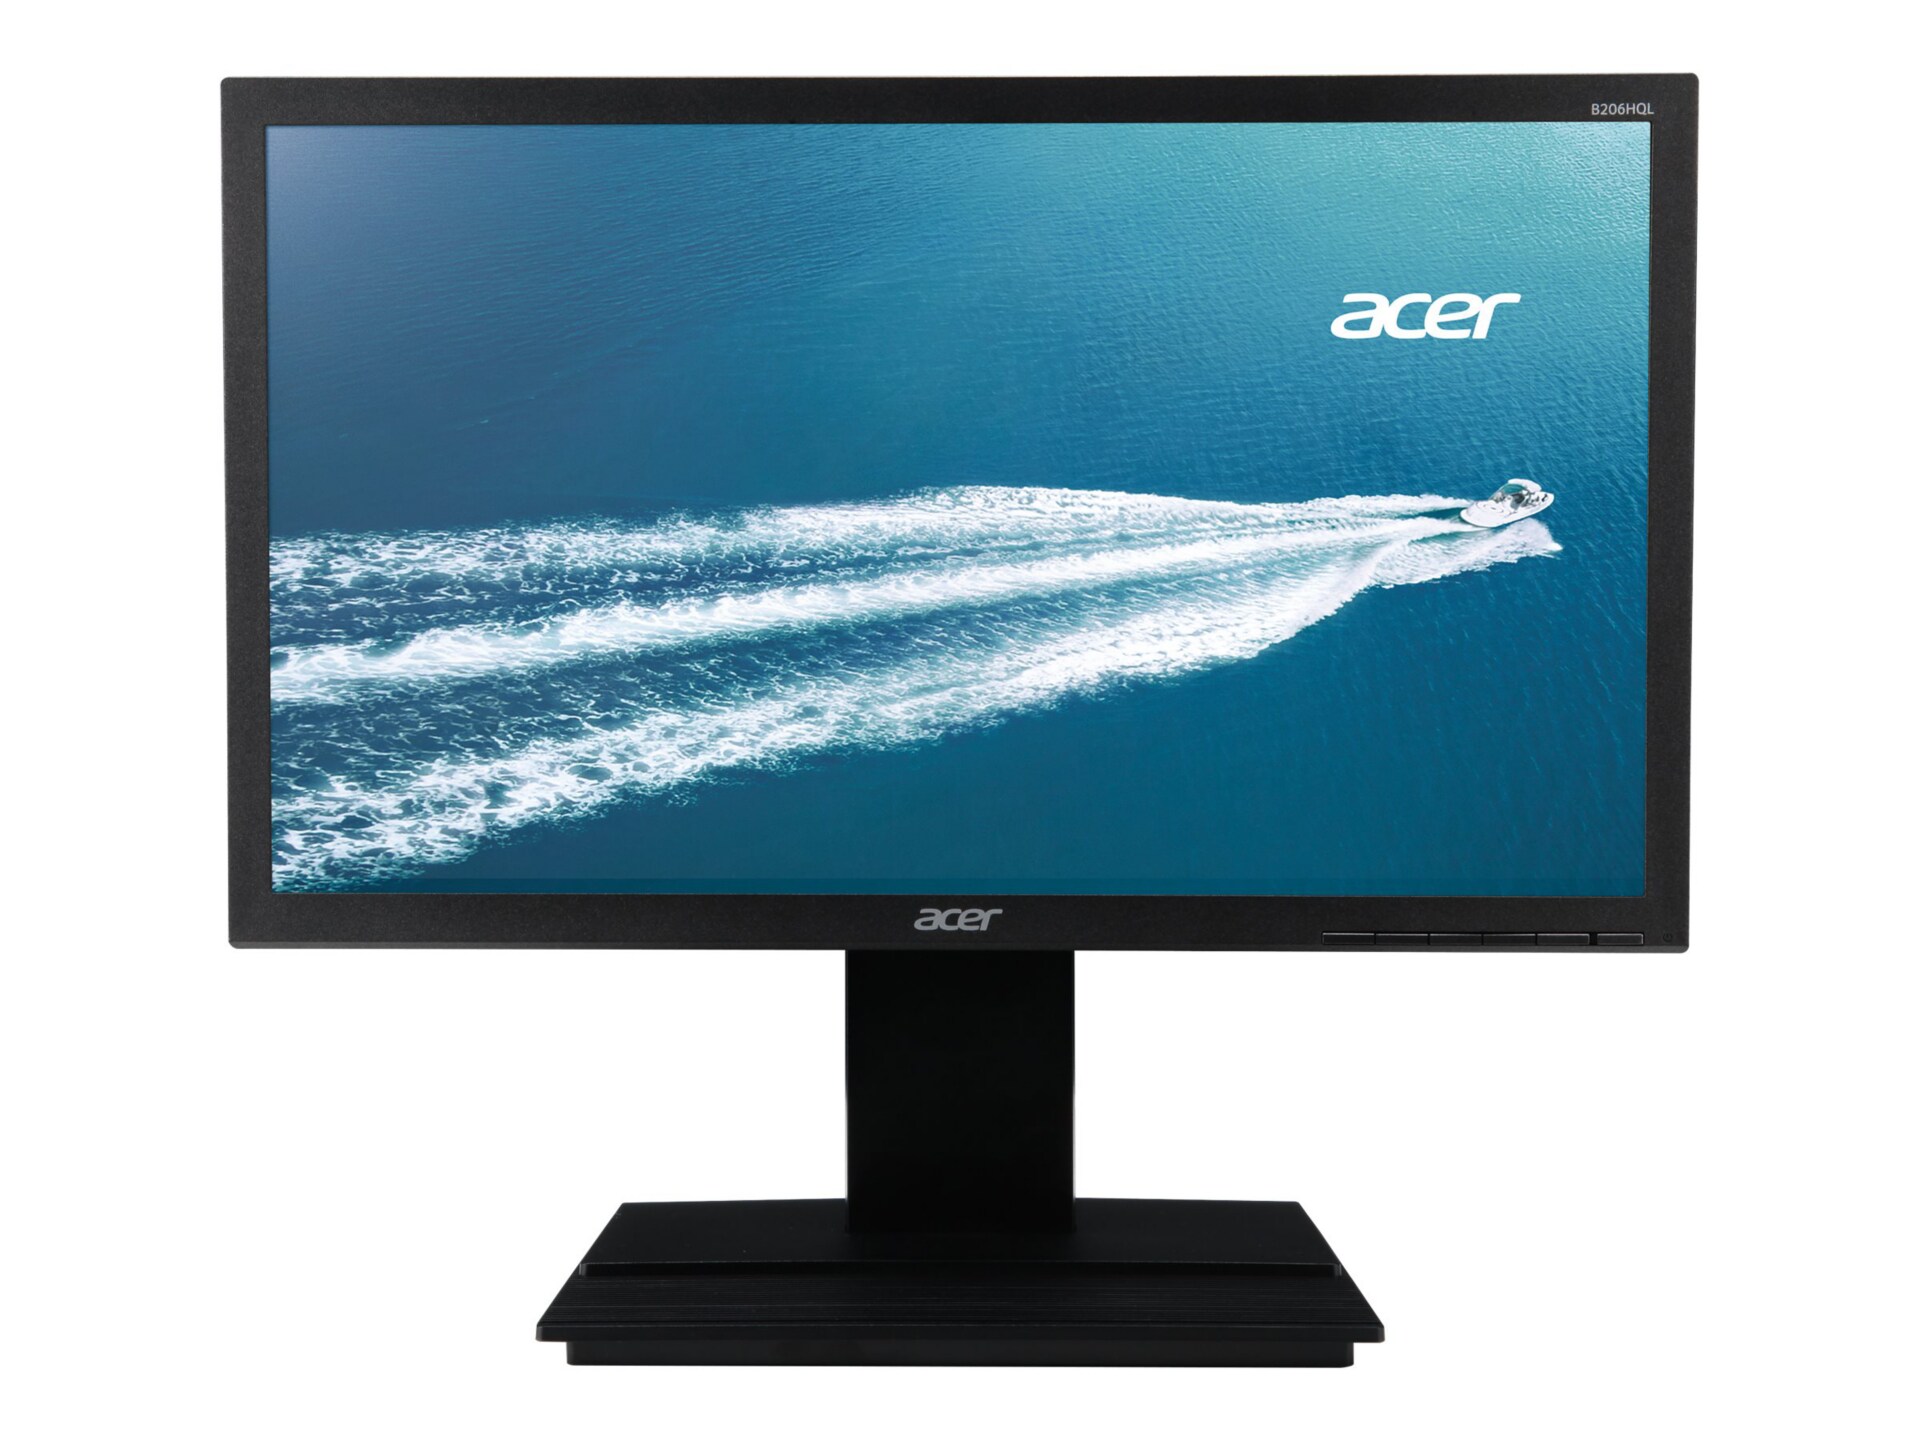 Acer B206HQL - LED monitor - Full HD (1080p) - 19.5"